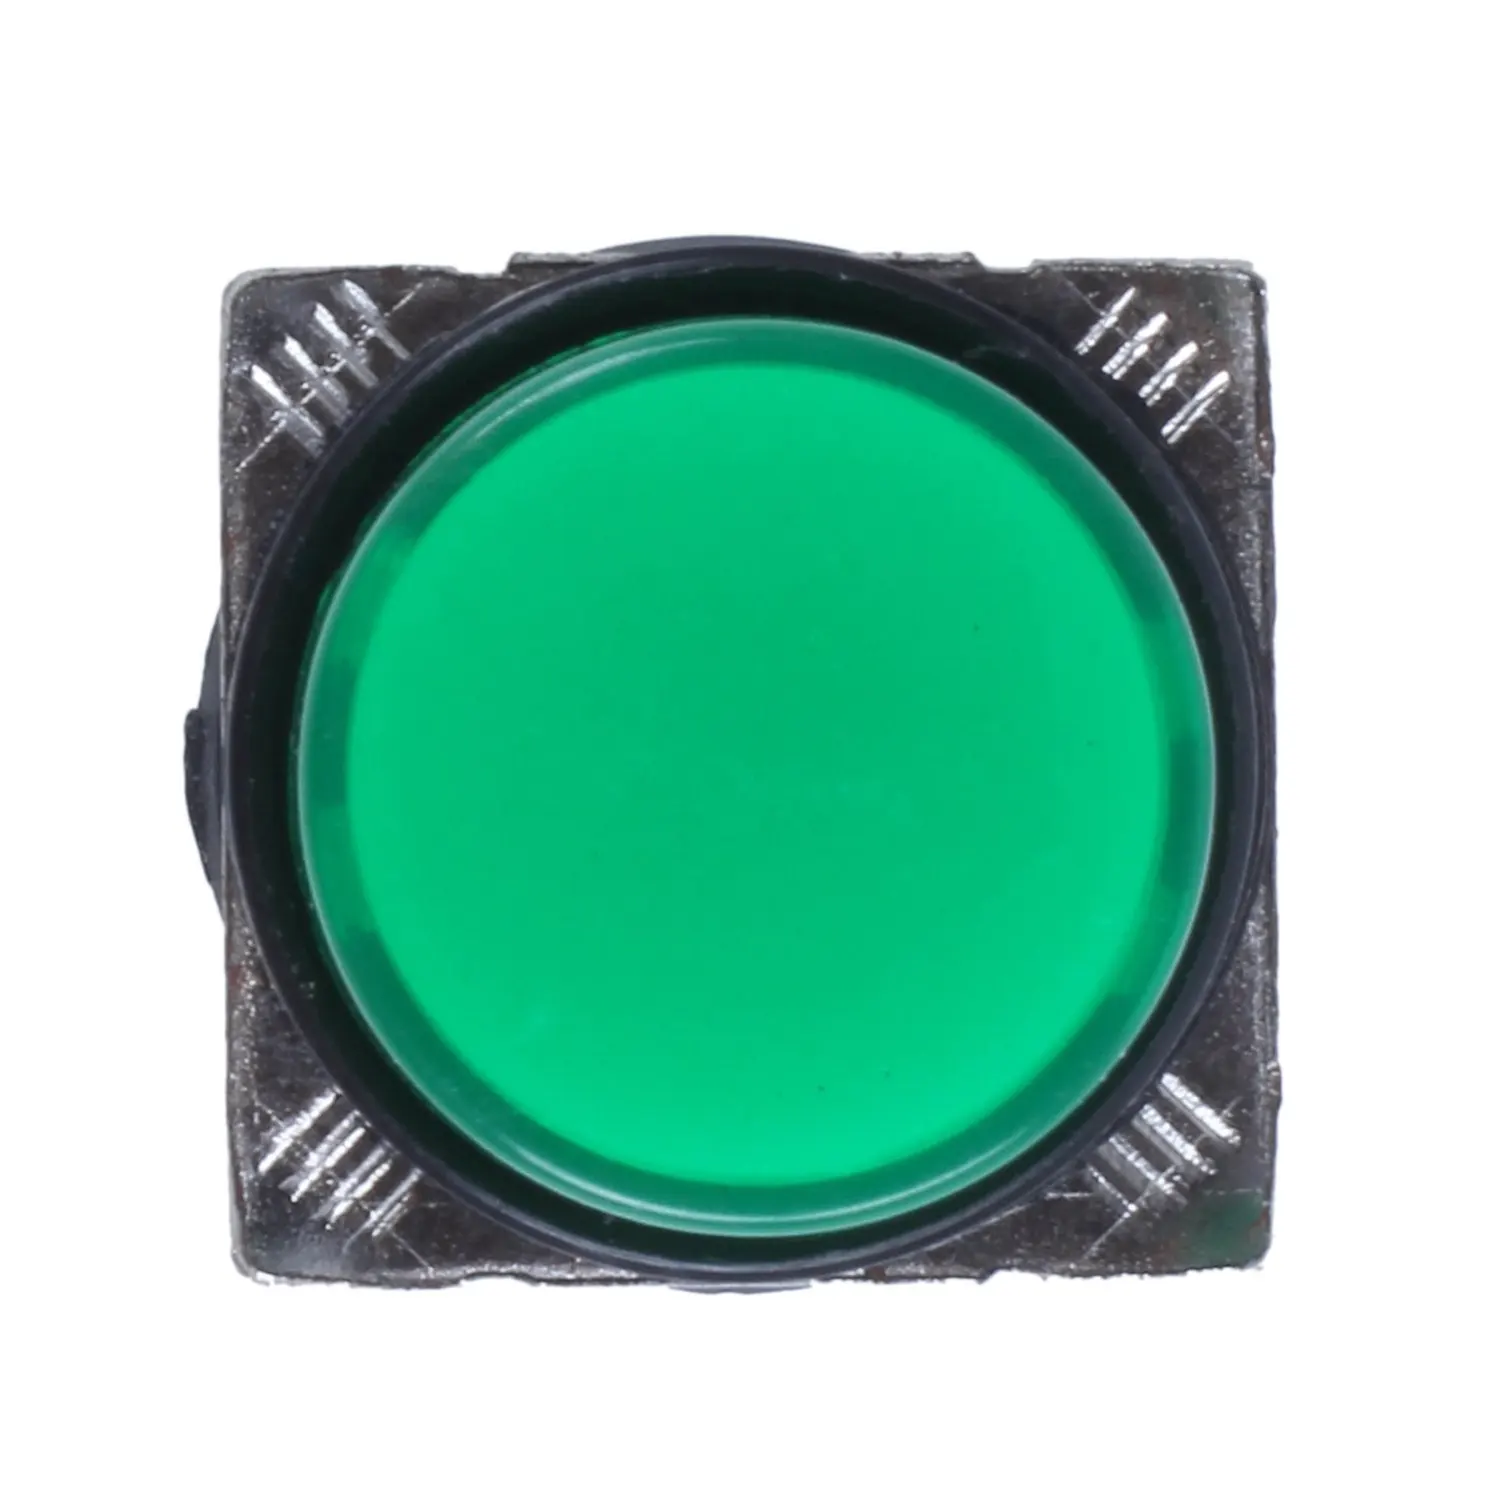 AC 250V 5A SPDT 1NO 1NC 5 סיכות הבריח ירוק החלף לחצן w 220V מנורת LED . ' - ' . 2